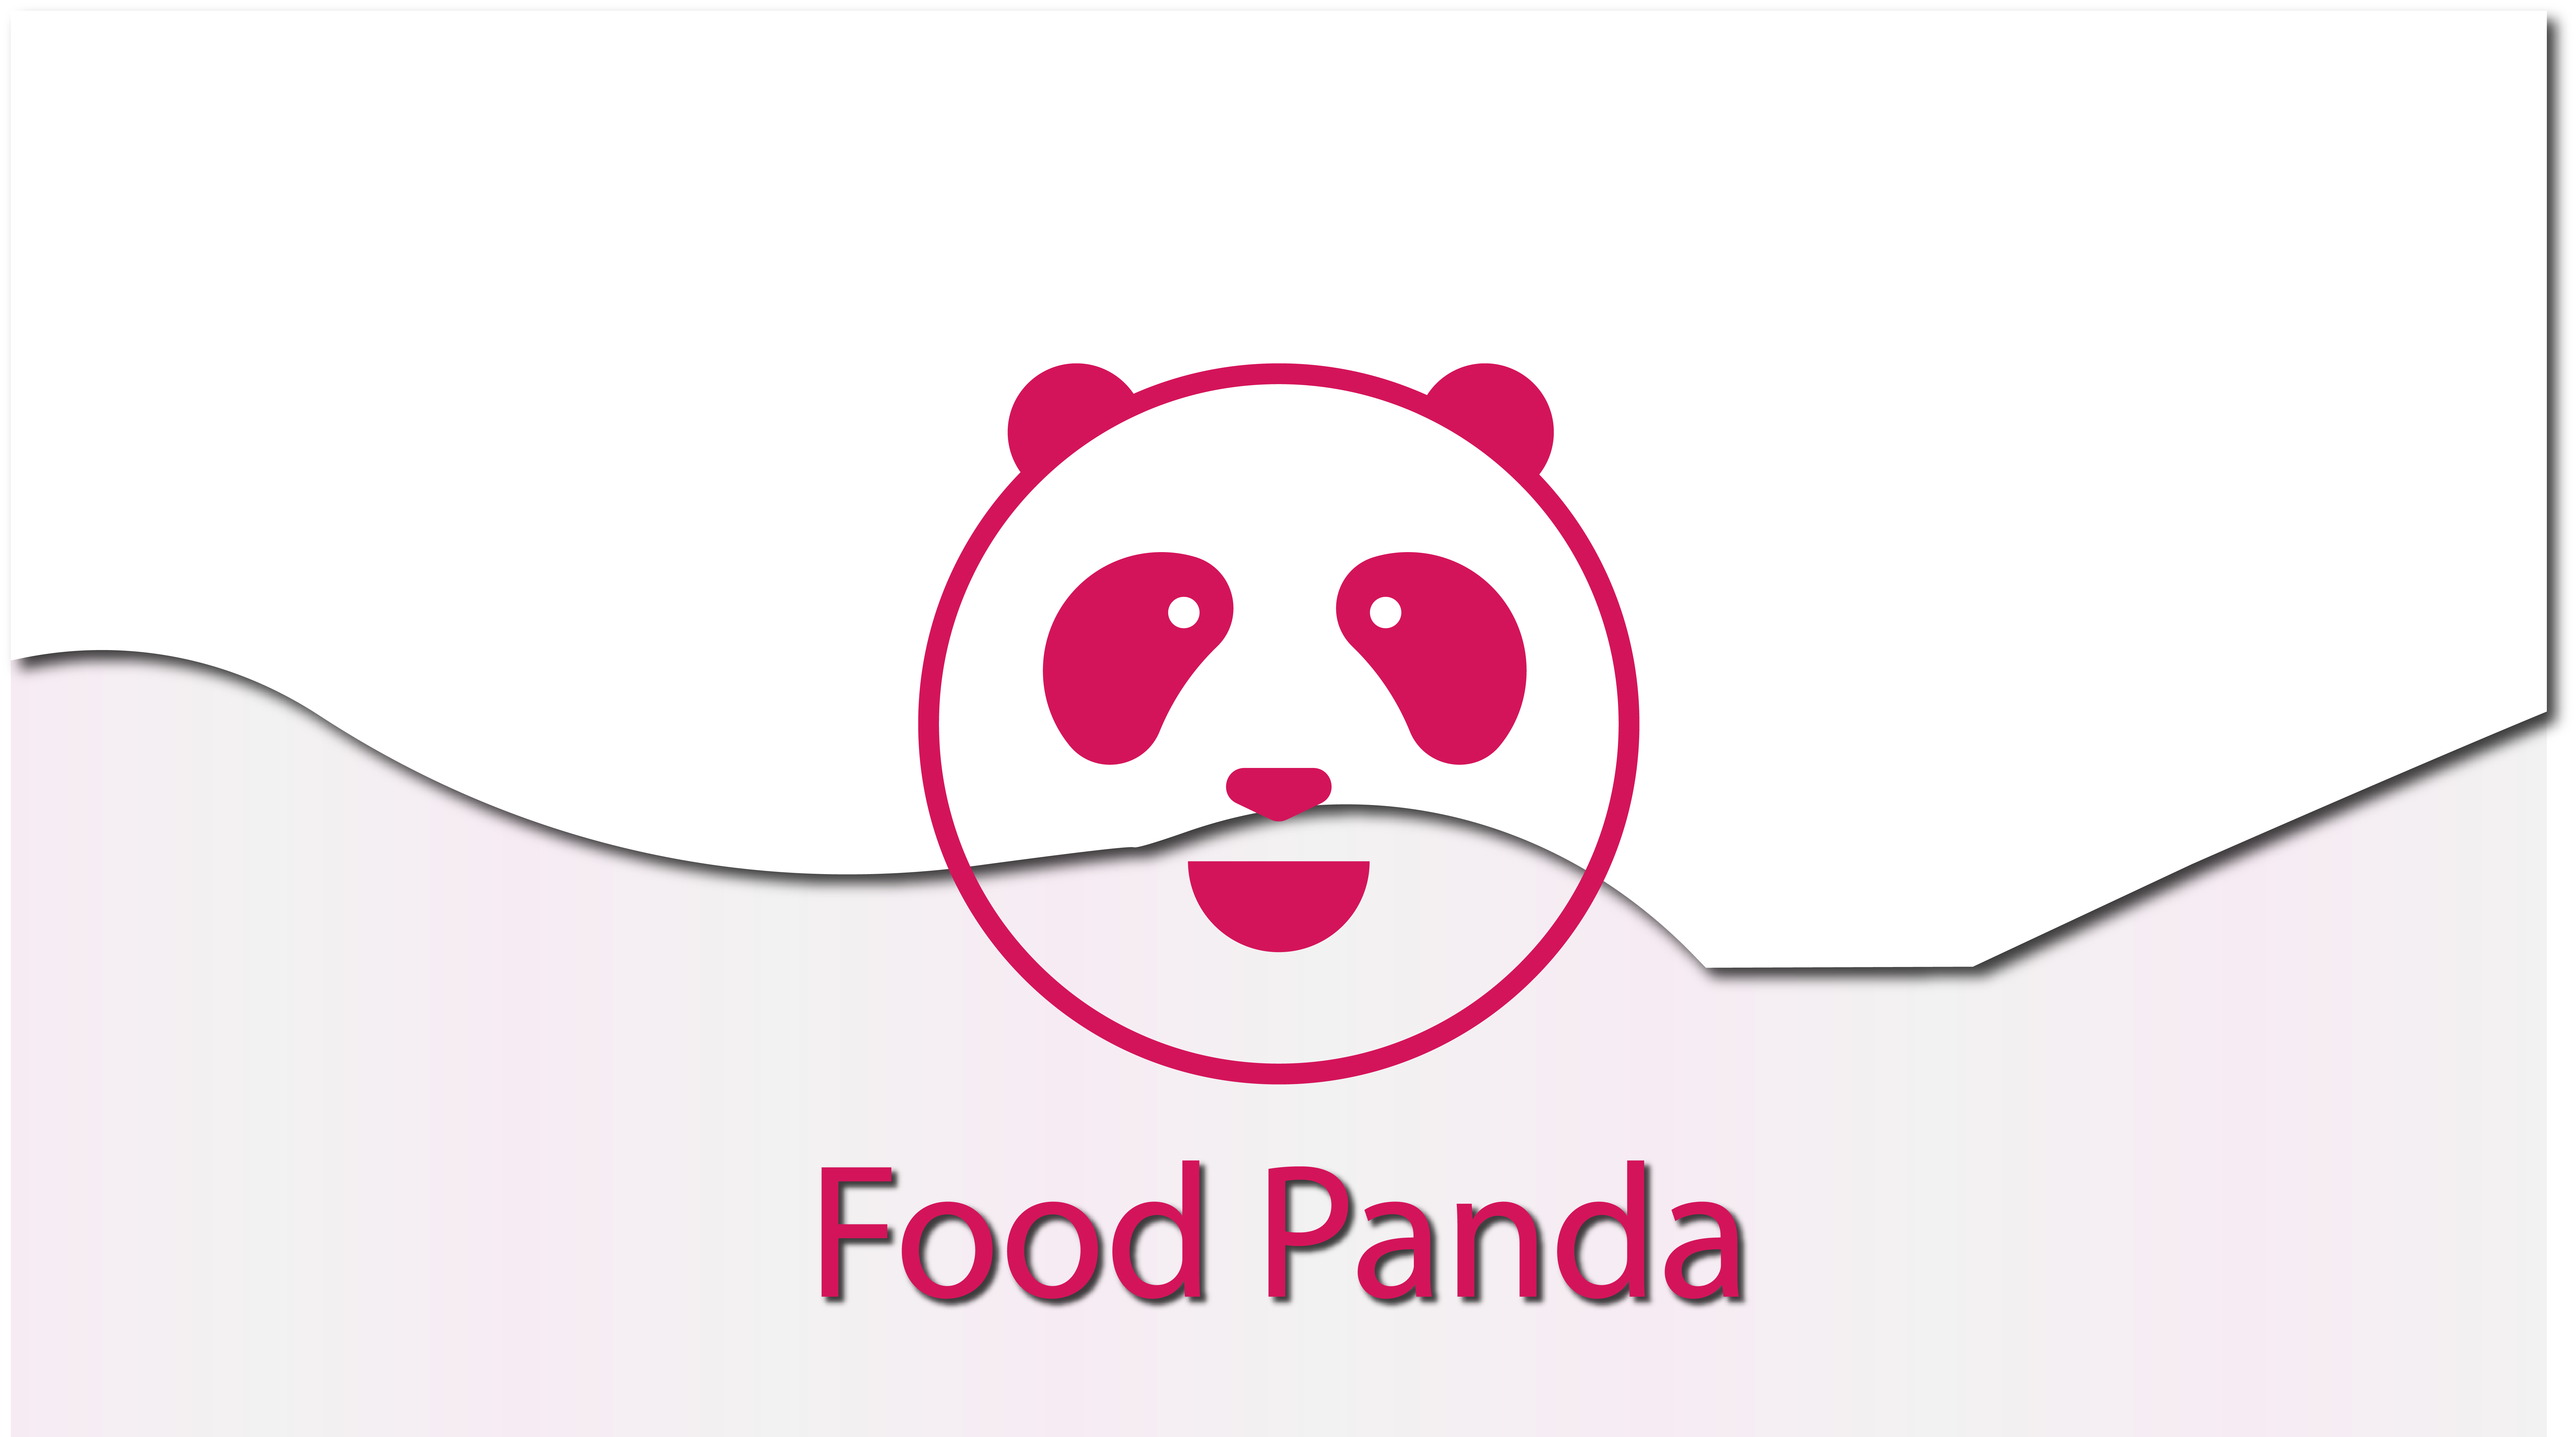 Zin Ko Ko Oo - Vendor Supply and onboarding Assistant Manager at foodpanda  - foodpanda | LinkedIn